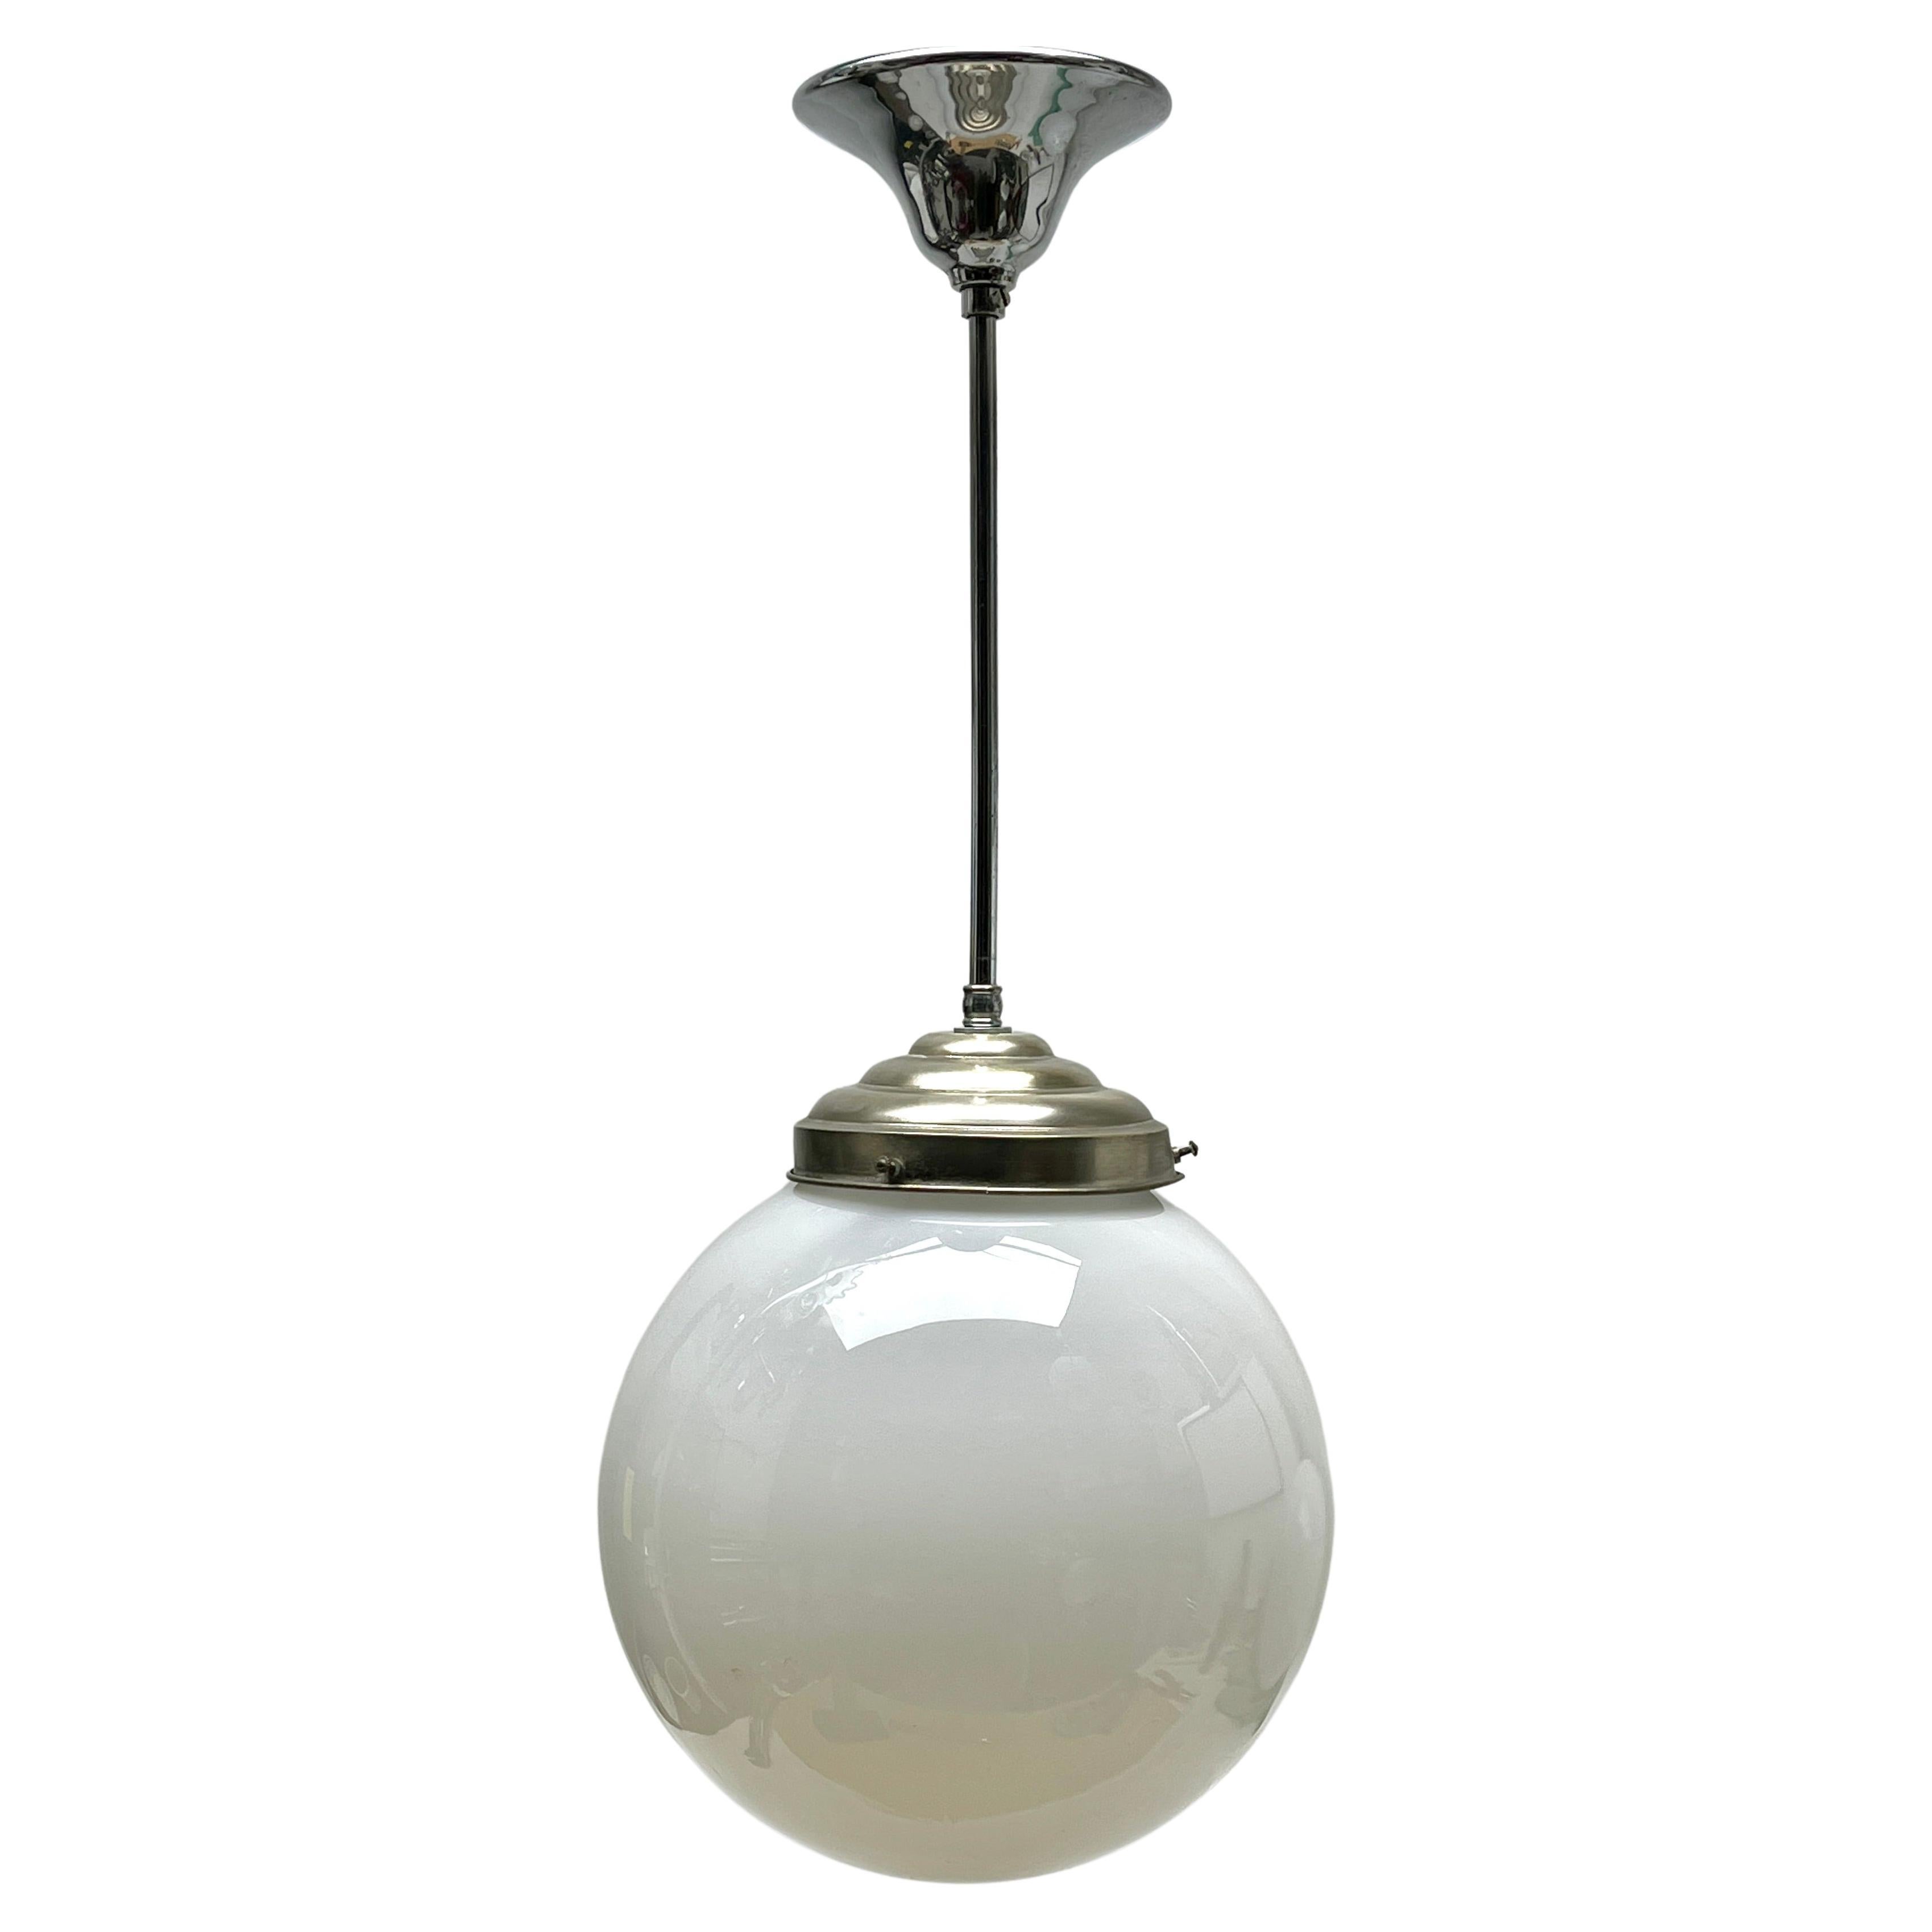 Phillips Pendel Stem Lampe mit kugelförmigem Opalschirm, 1930er Jahre, Niederlande im Angebot